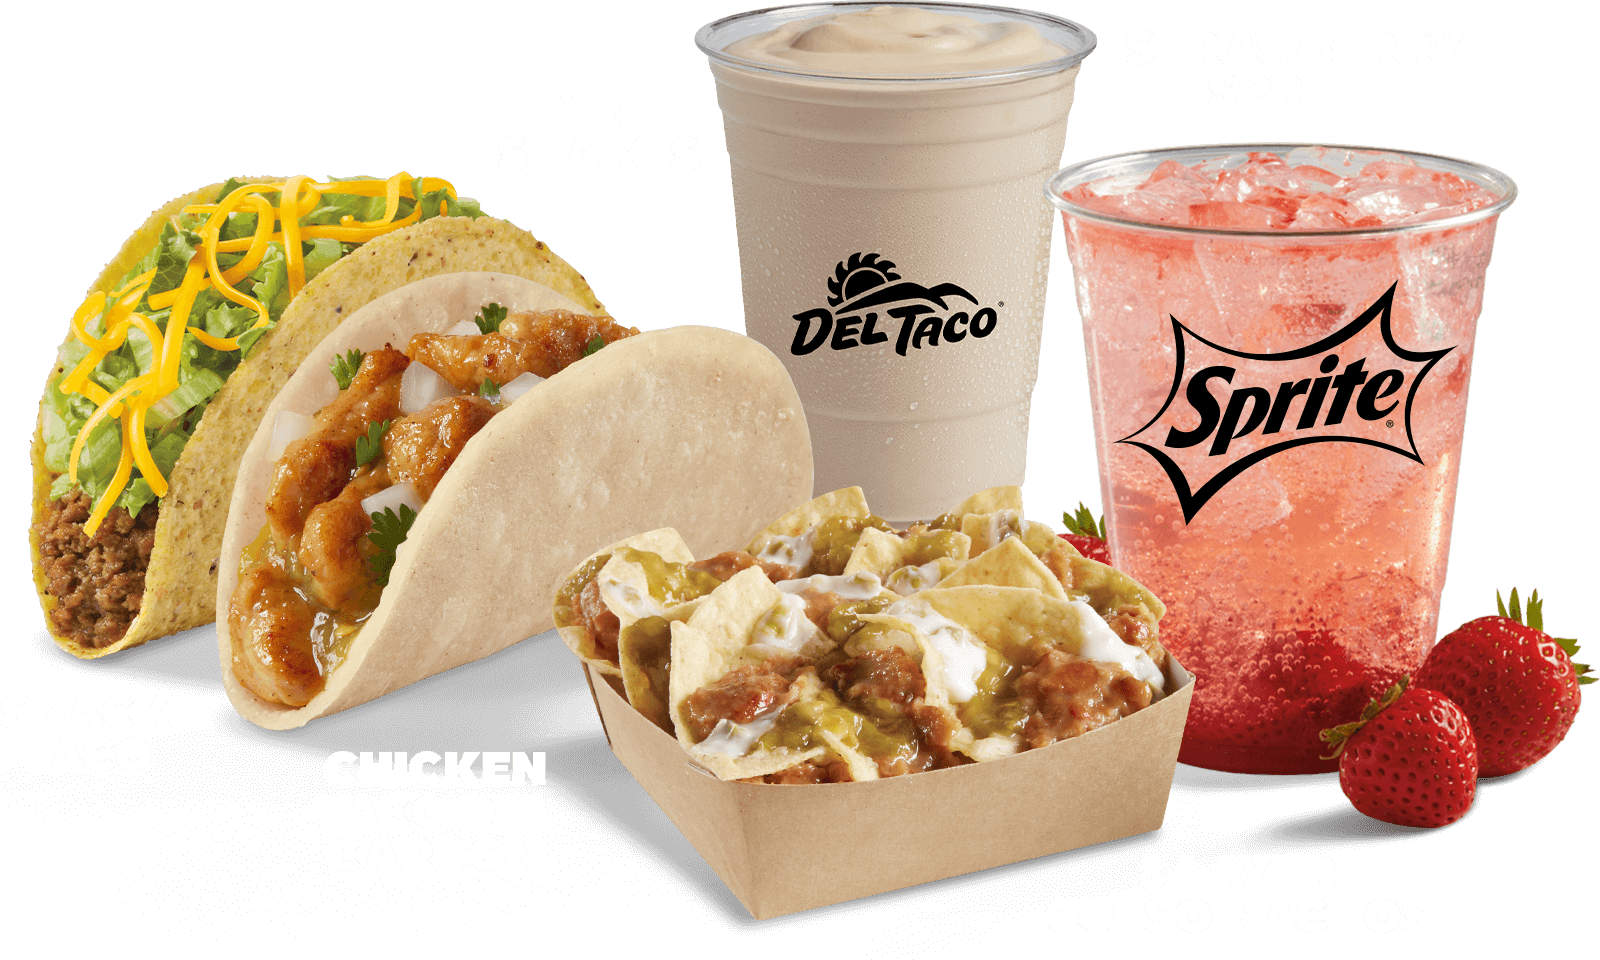 Featuring Snack Taco, Chicken Taco Al Carbon, 3 Layer Nachos, Mini Shakes, and Strawberry Sprite